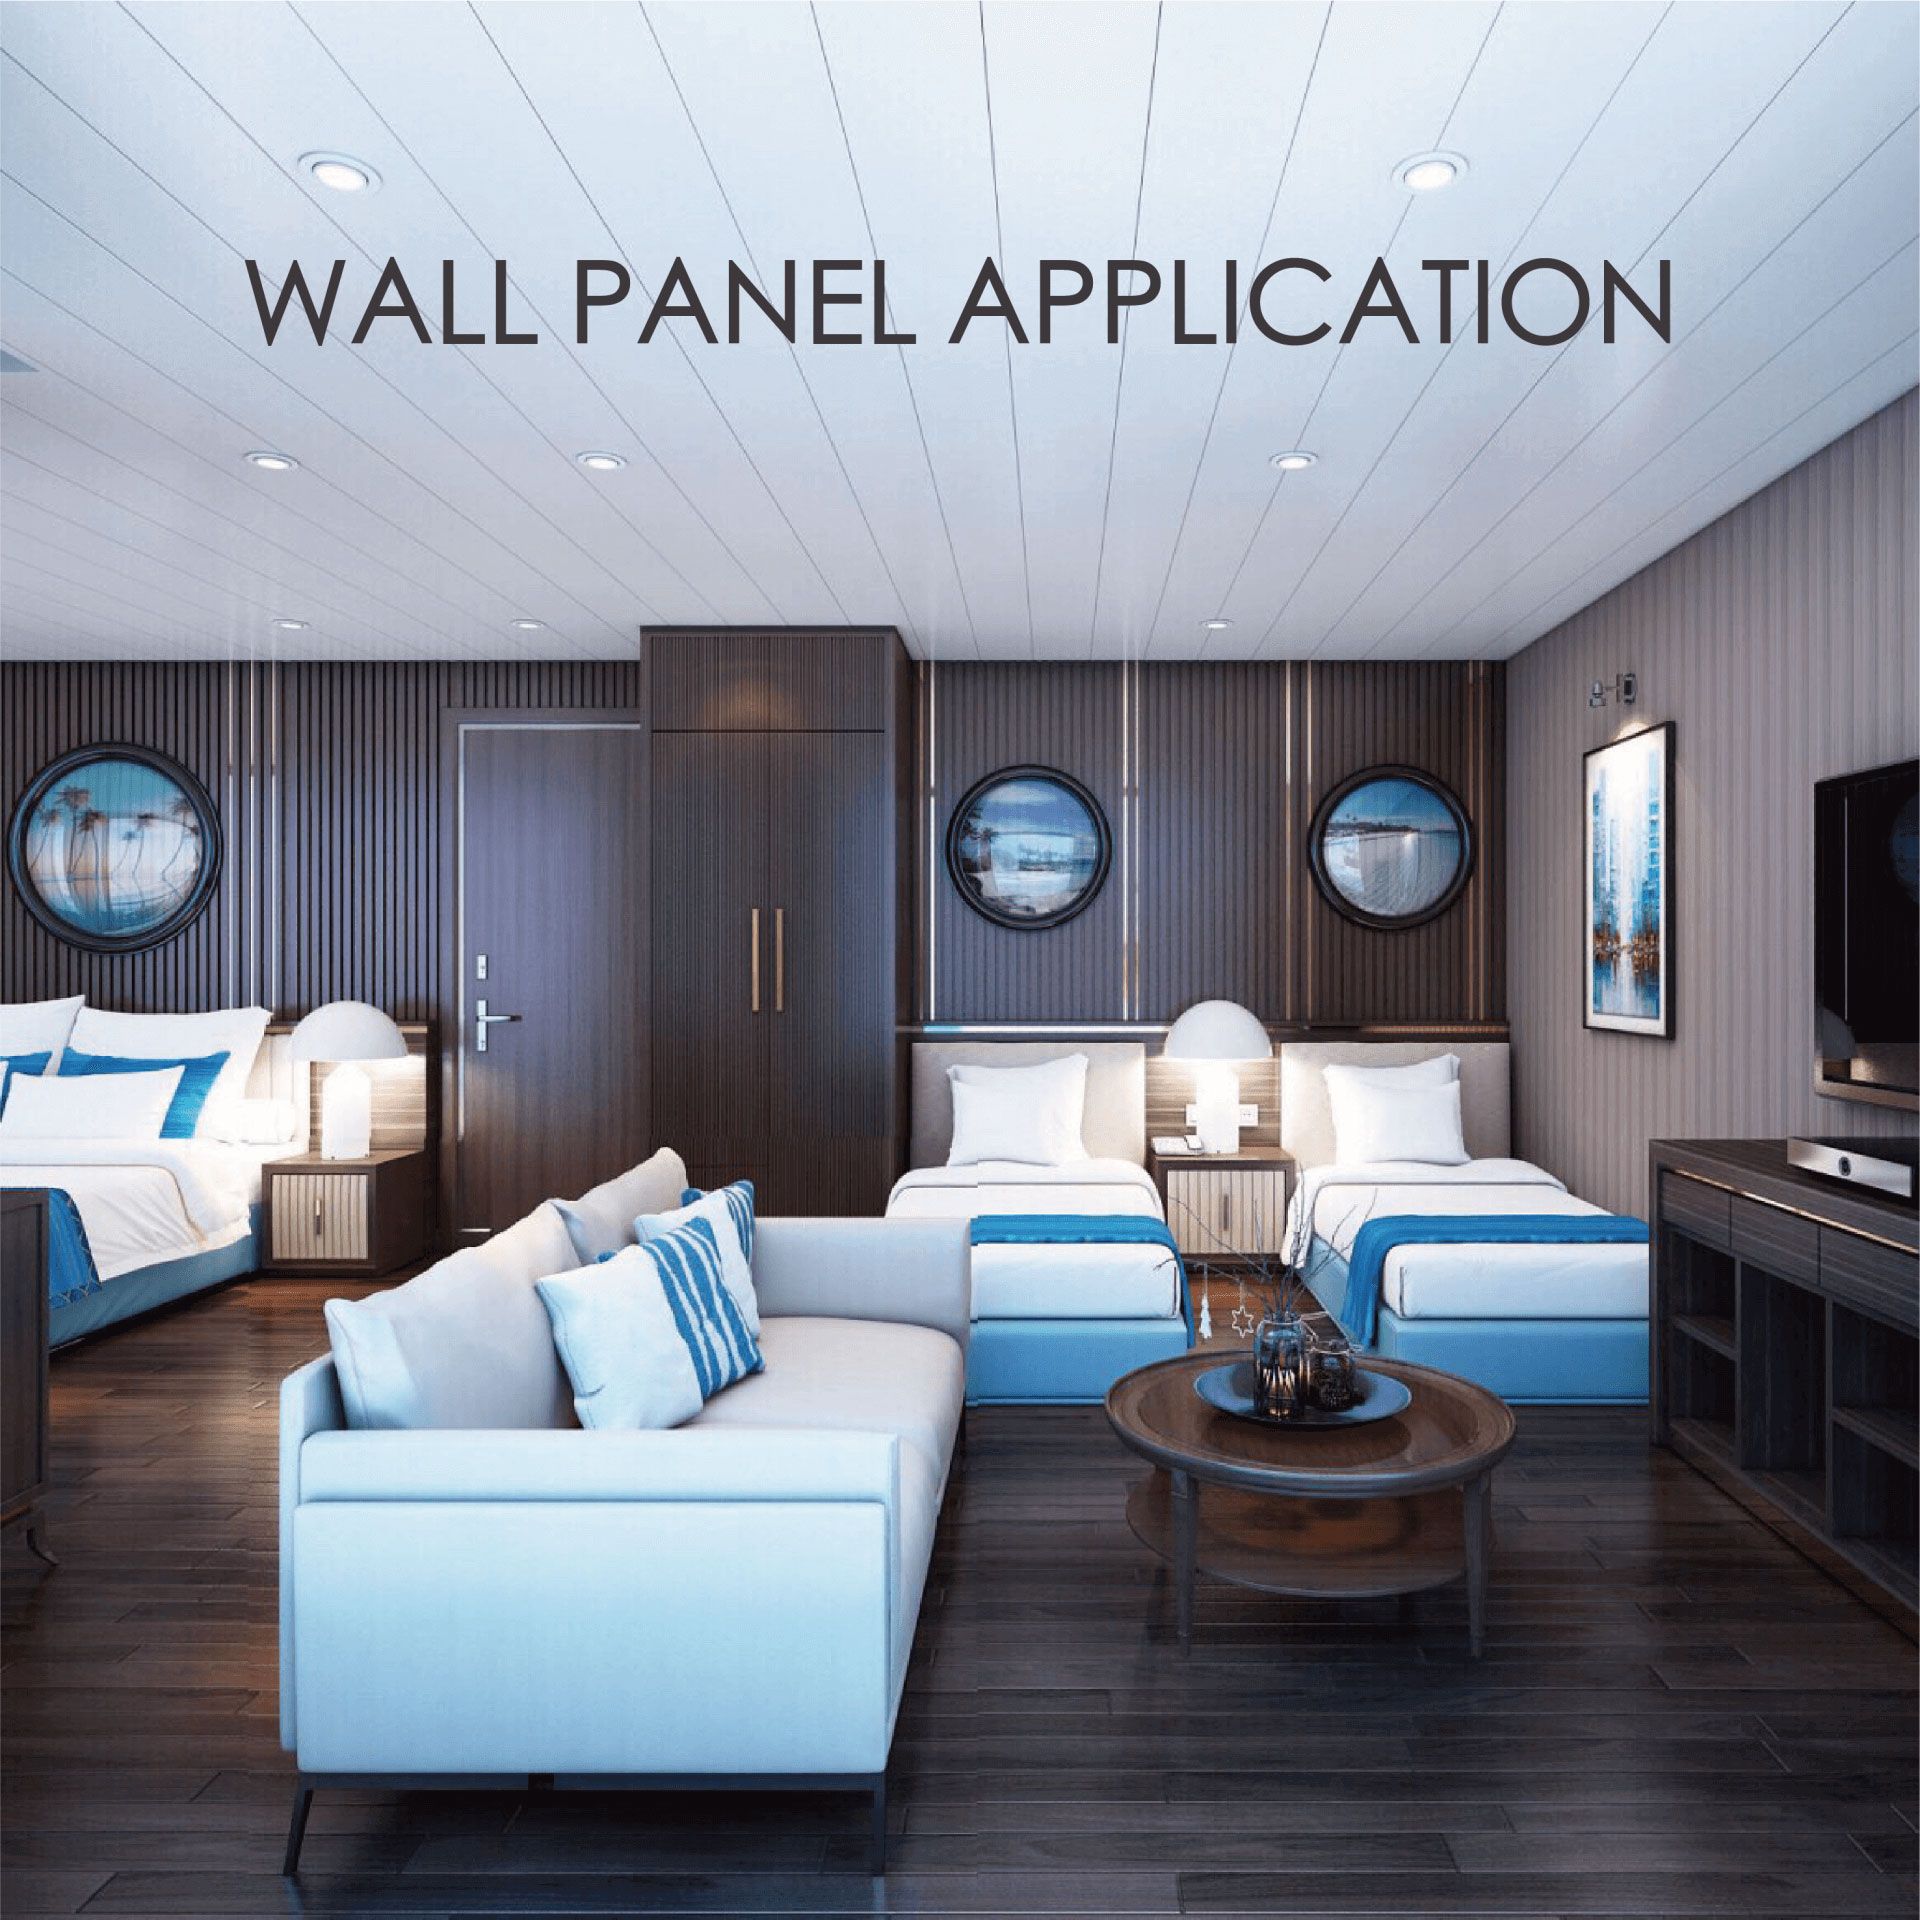 Wall Panel Application